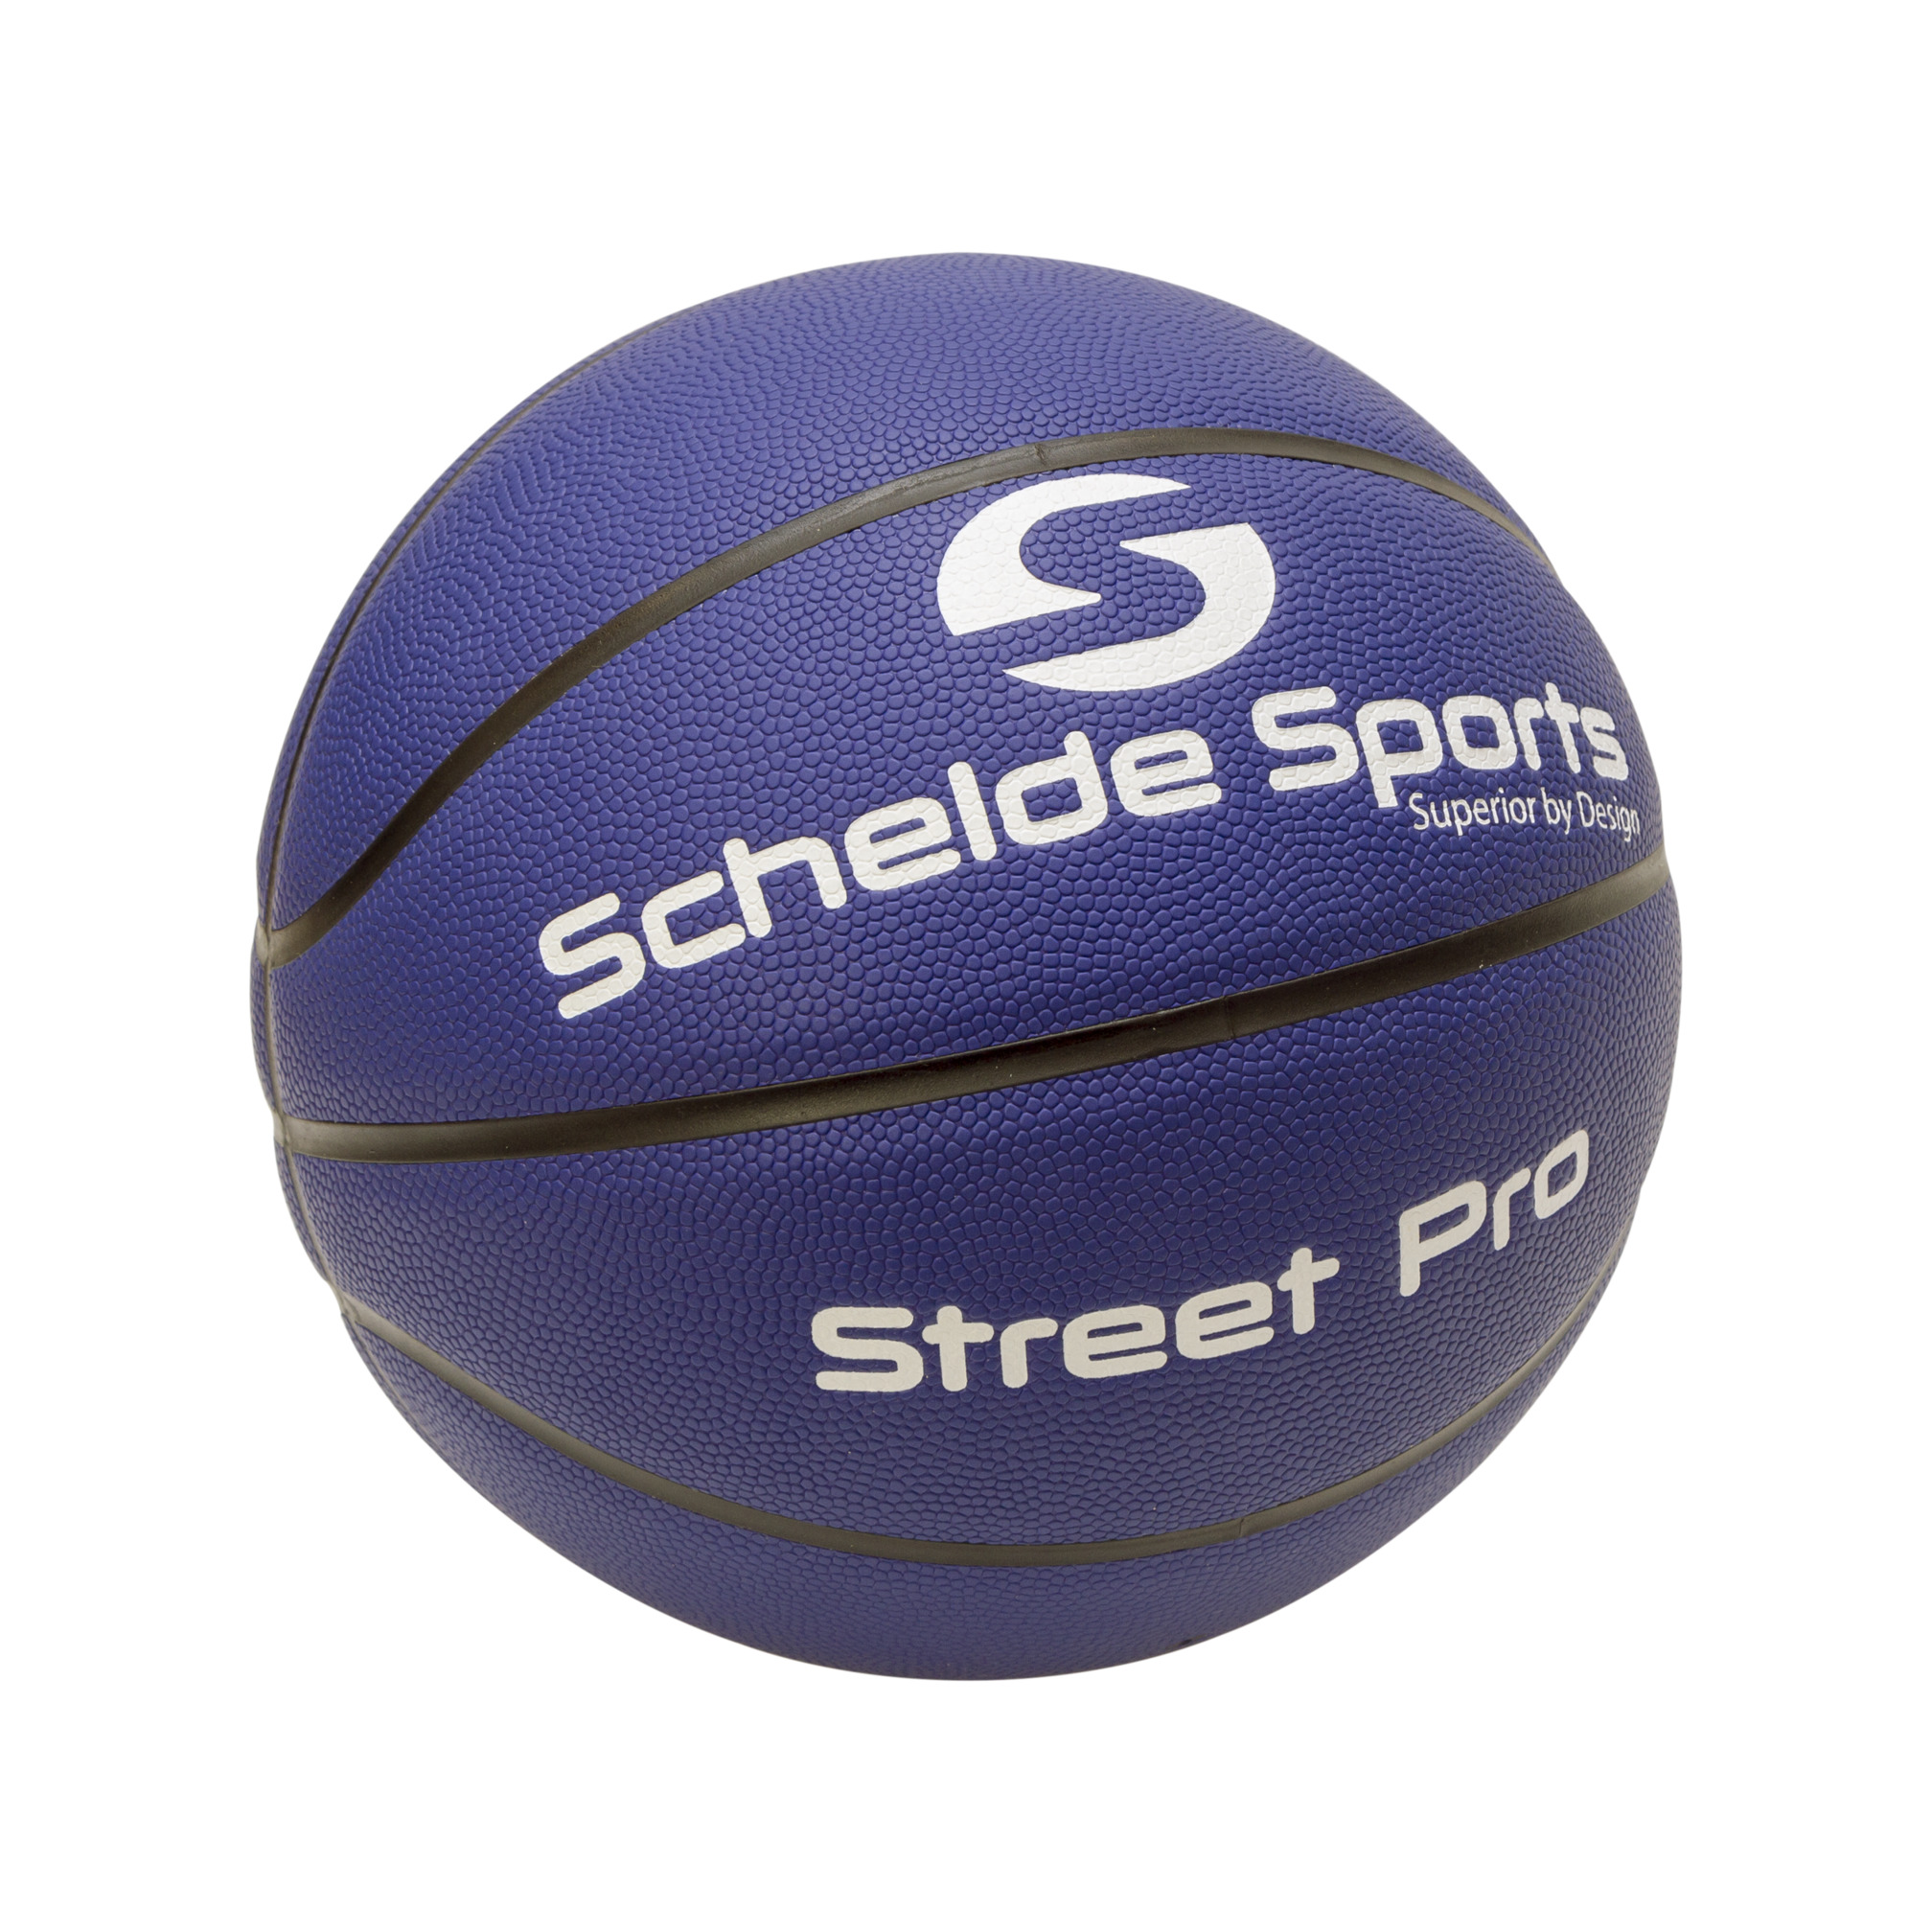 Schelde Sports Basketball 3x3 Street Pro, Größe 6